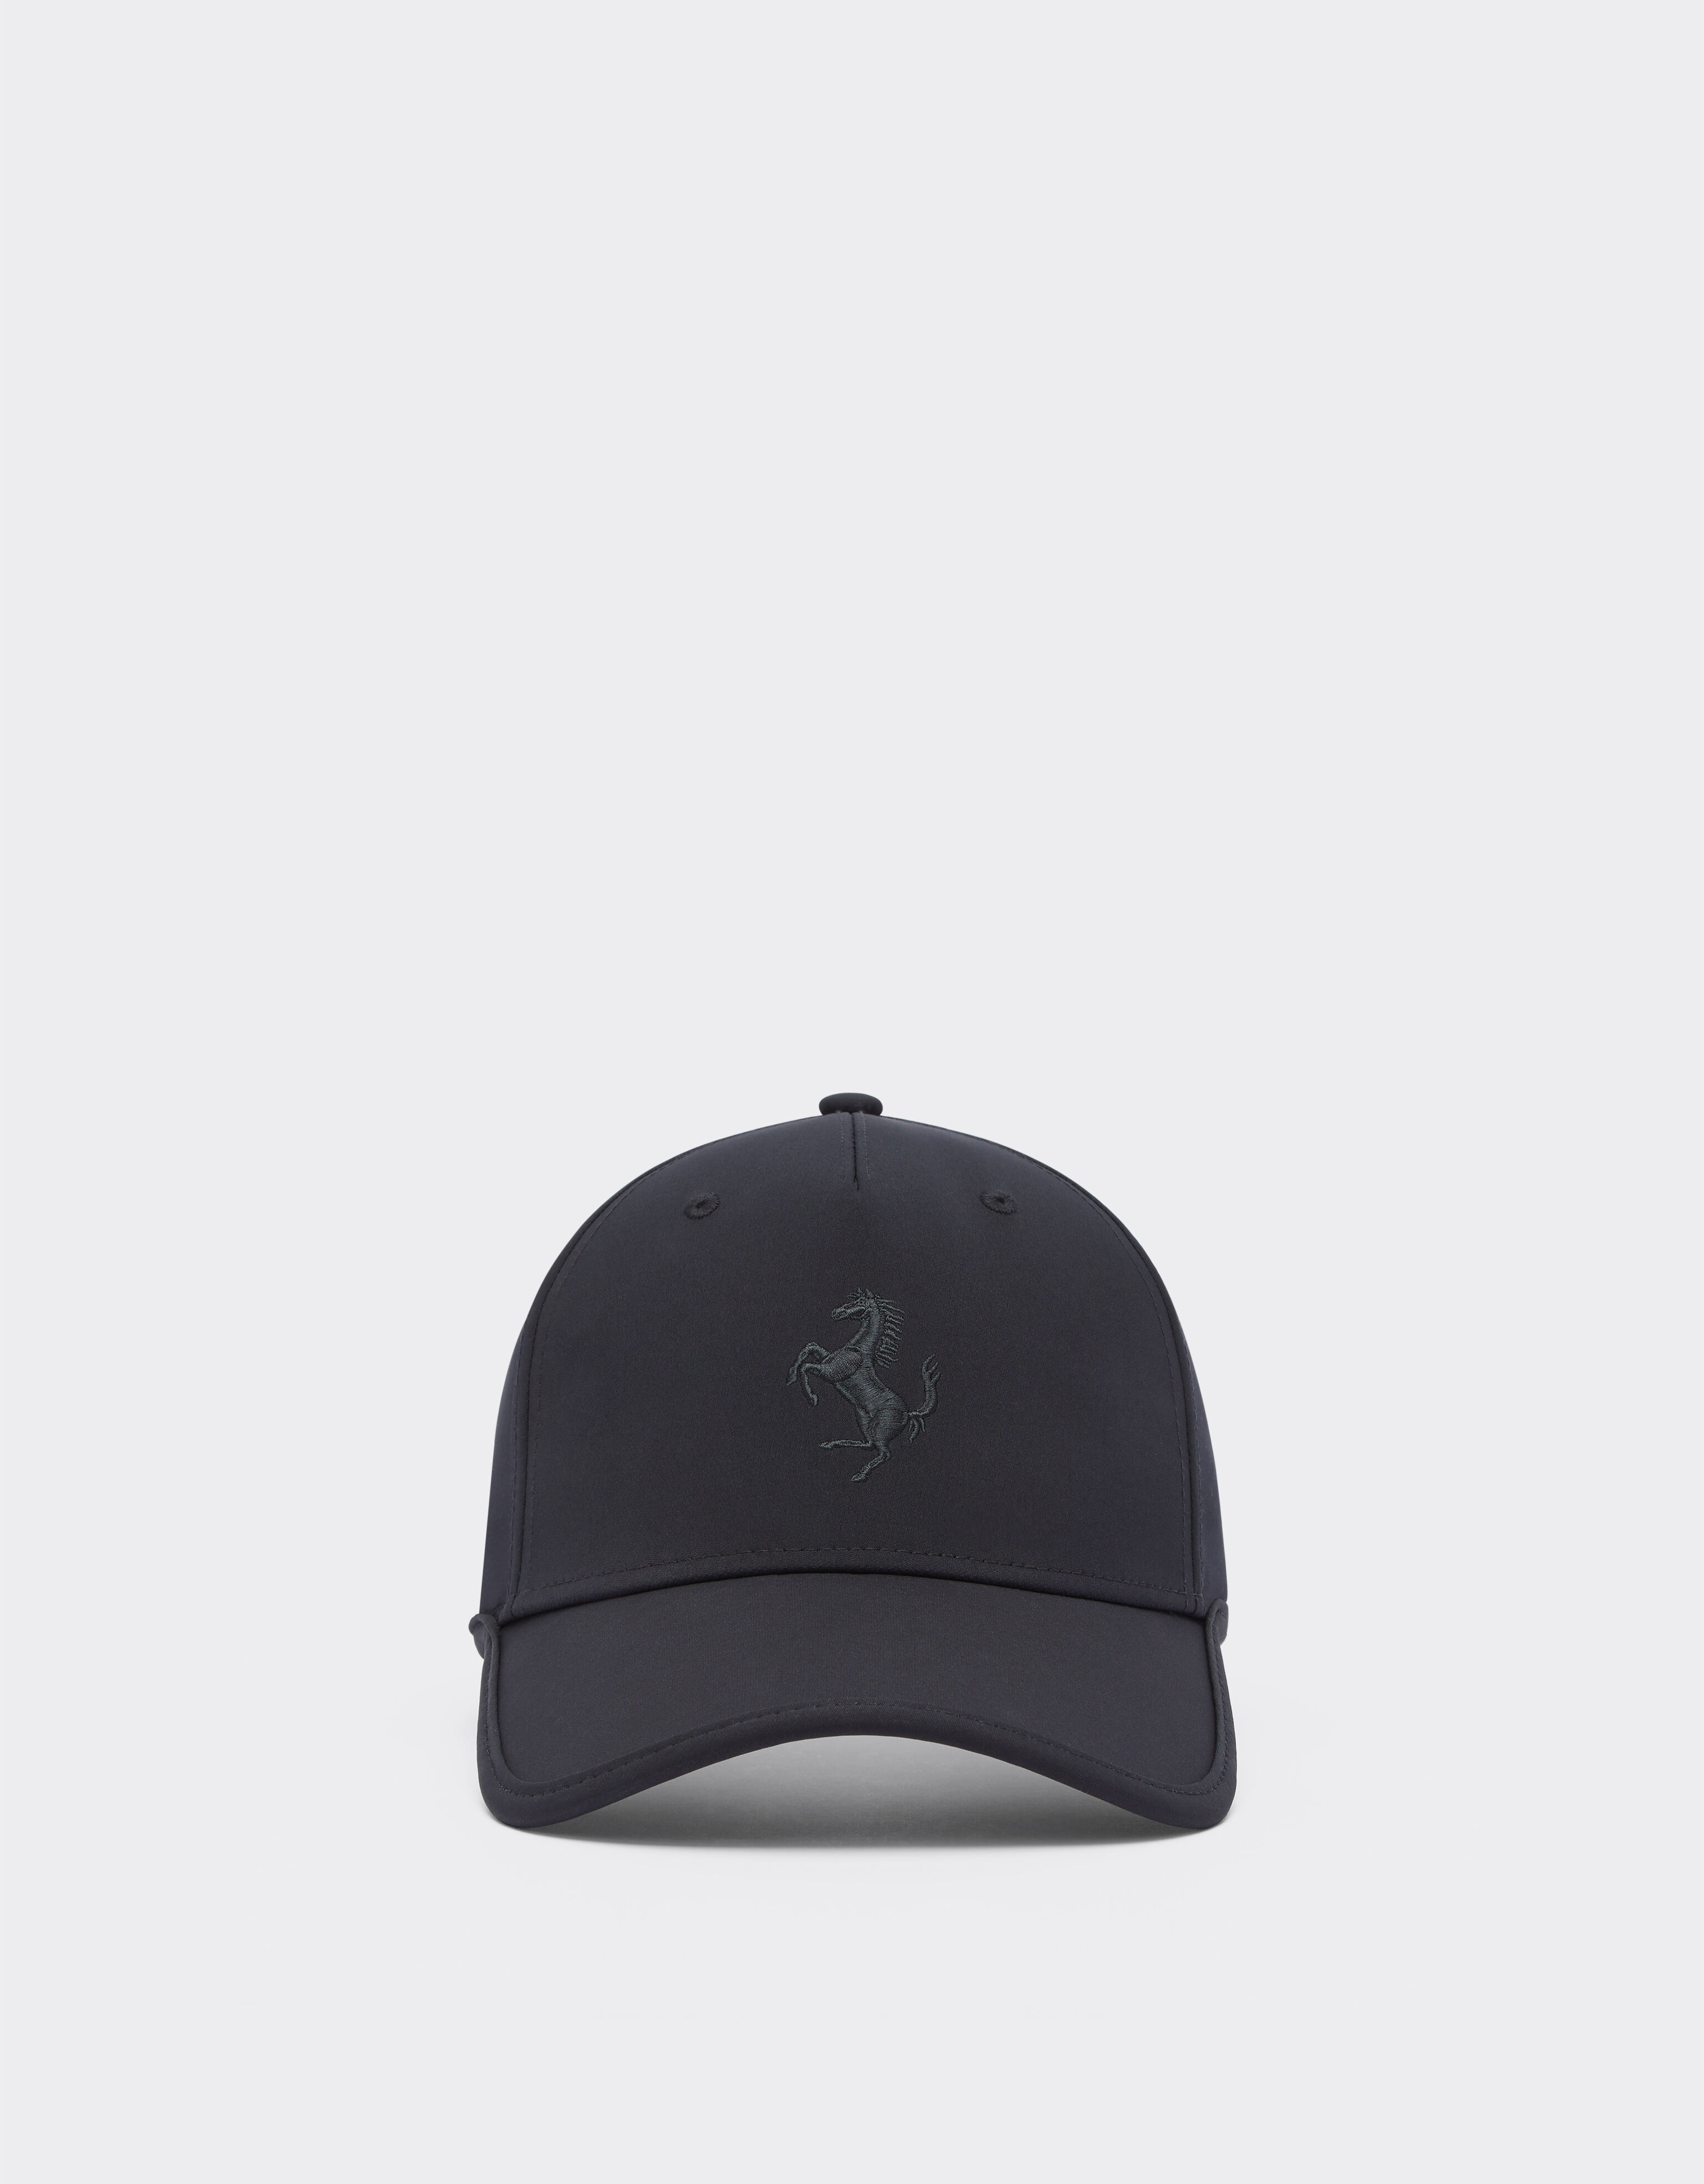 Ferrari Junior baseball hat with Prancing Horse detail Ingrid 21263f